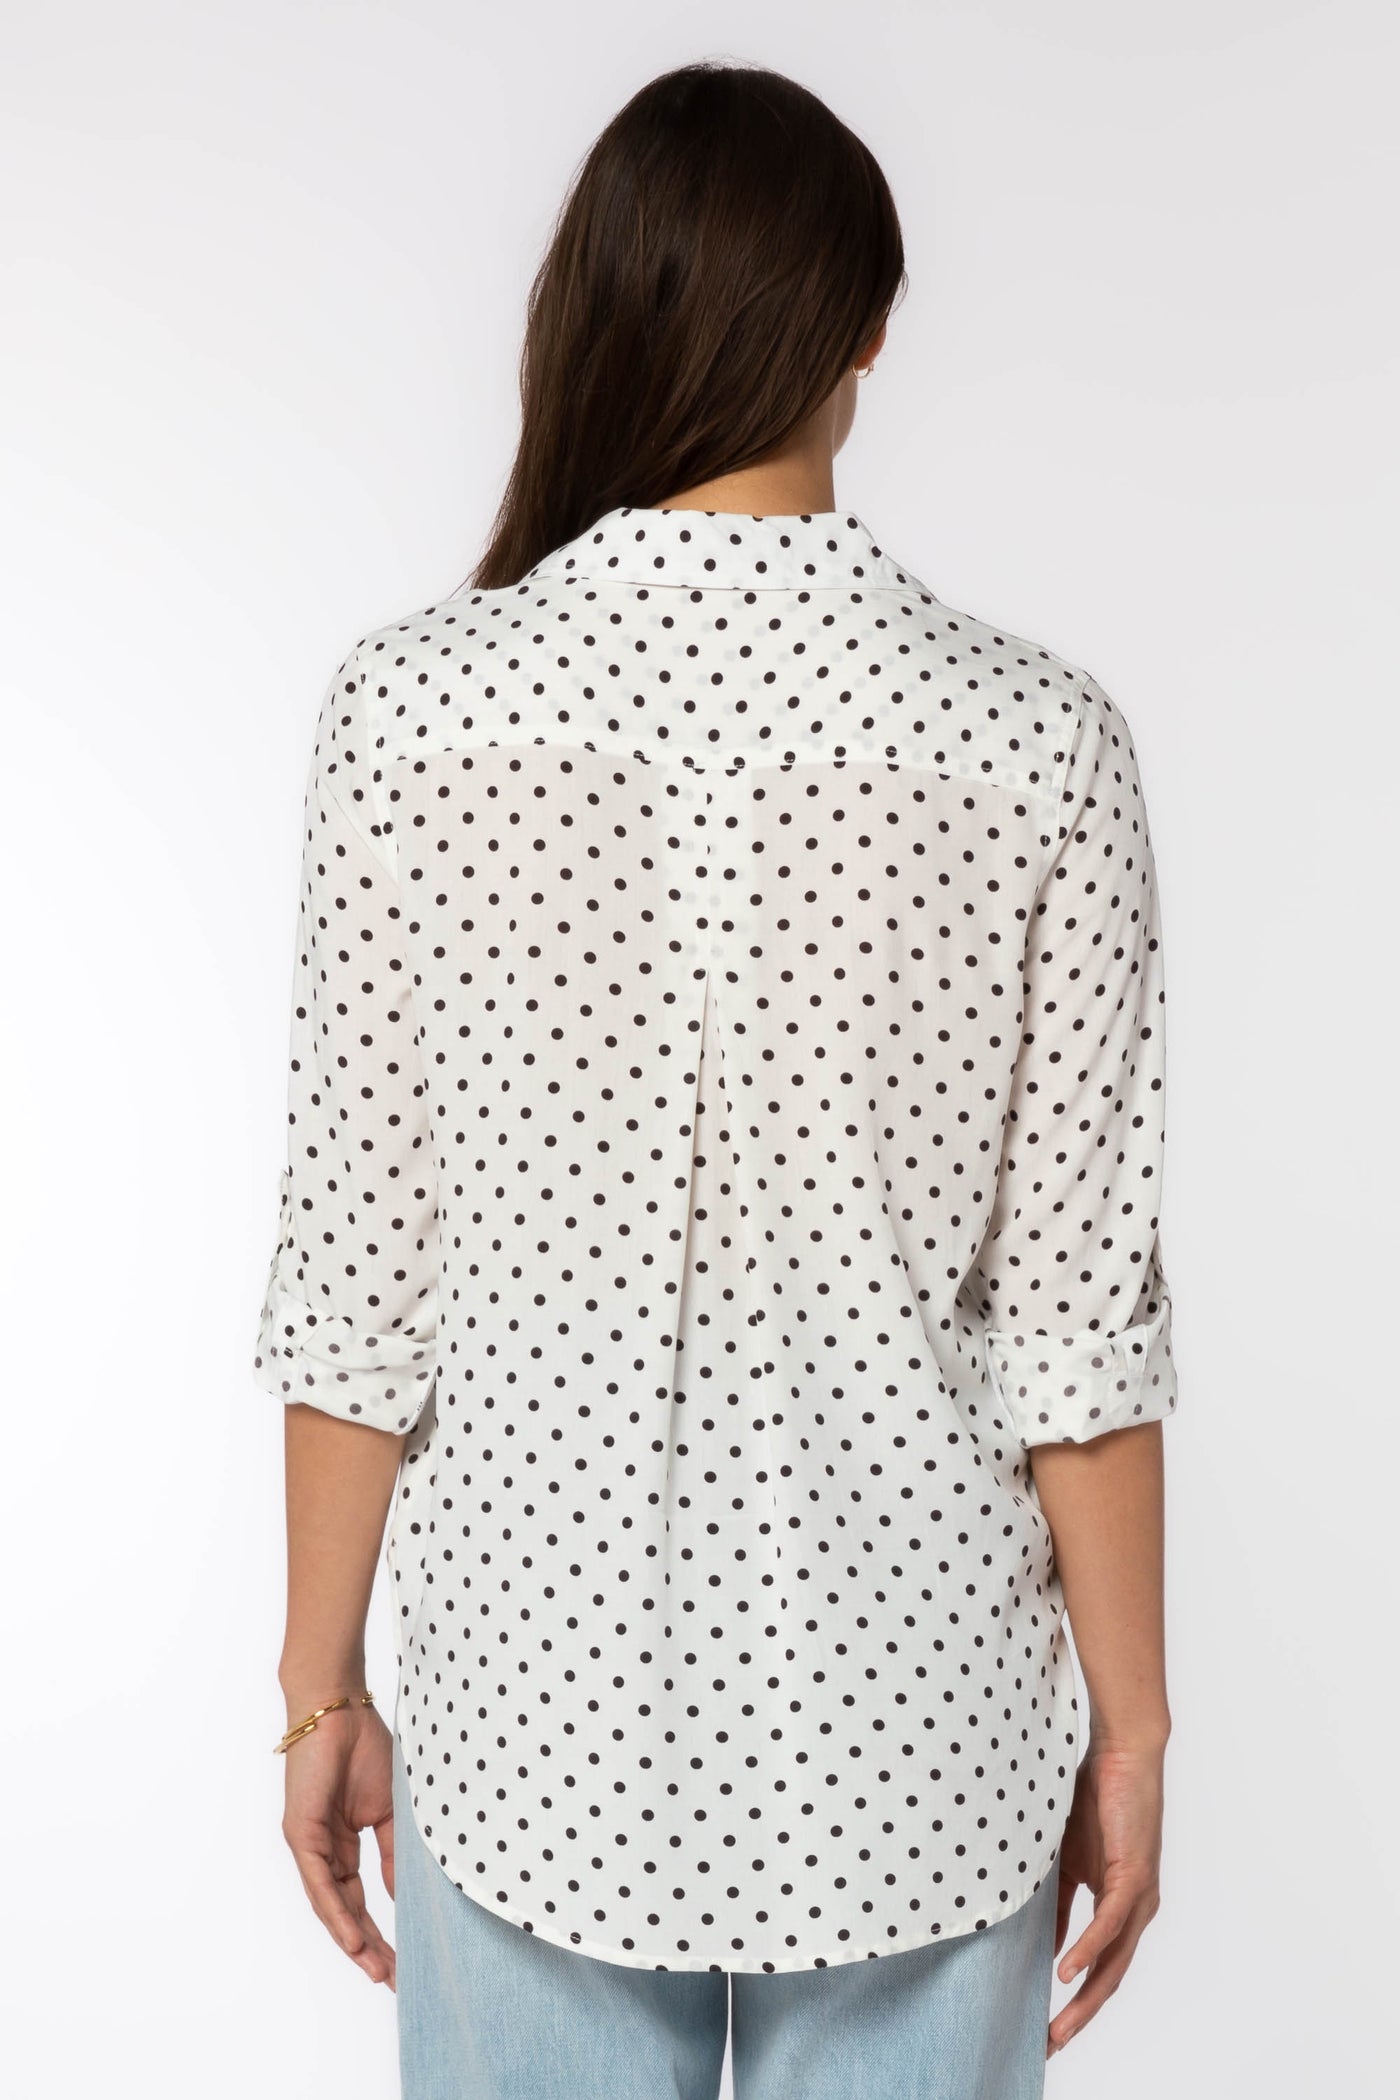 Women's Polka Dot Shirts & Tops, Clothing